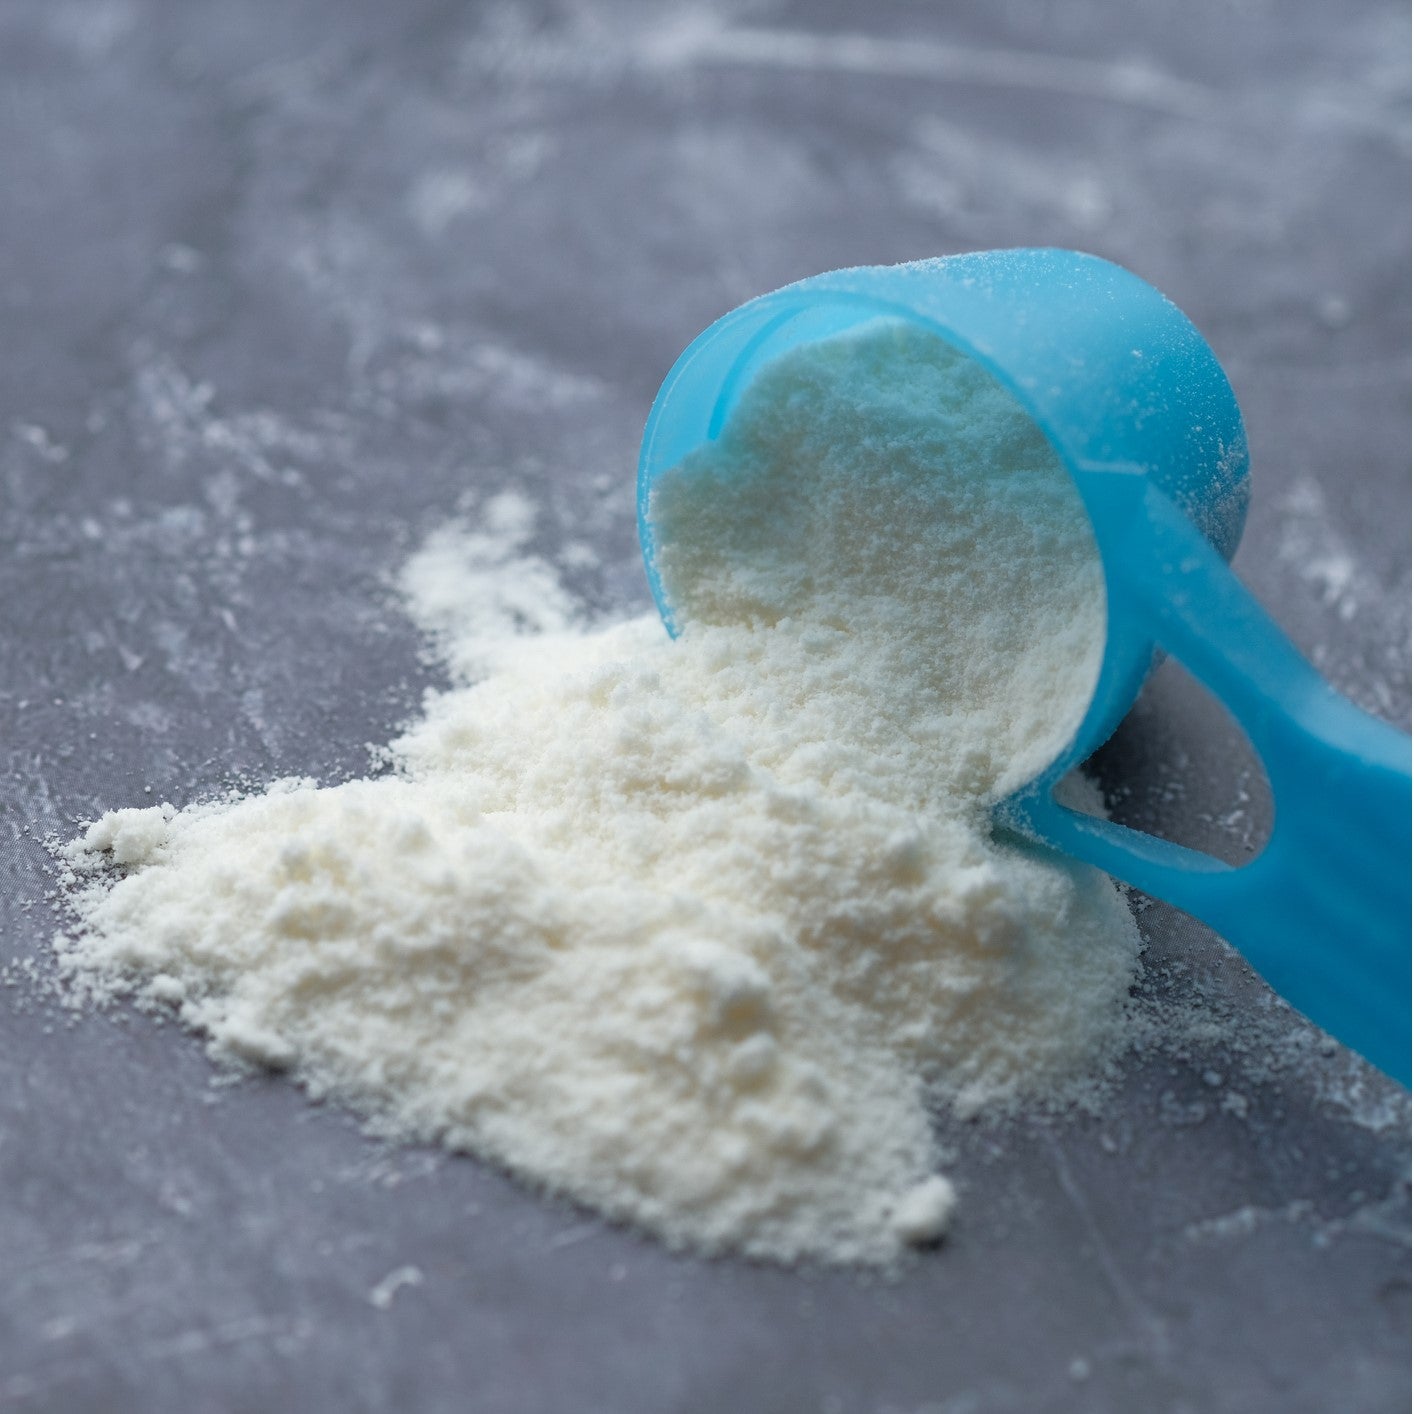 A scoop of Nido milk powder.